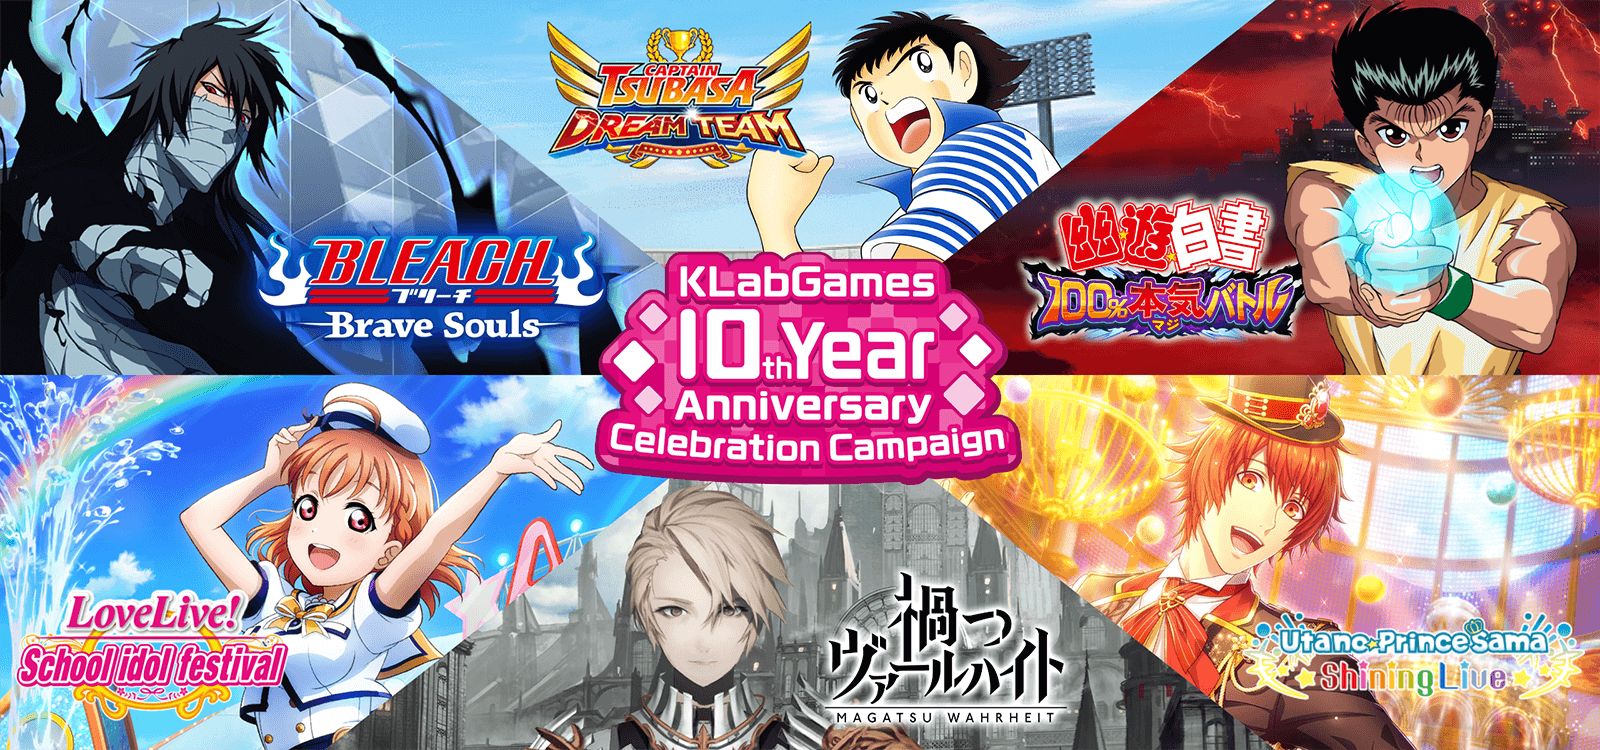 KLabGames 10th Year Anniversary Celebration Campaign